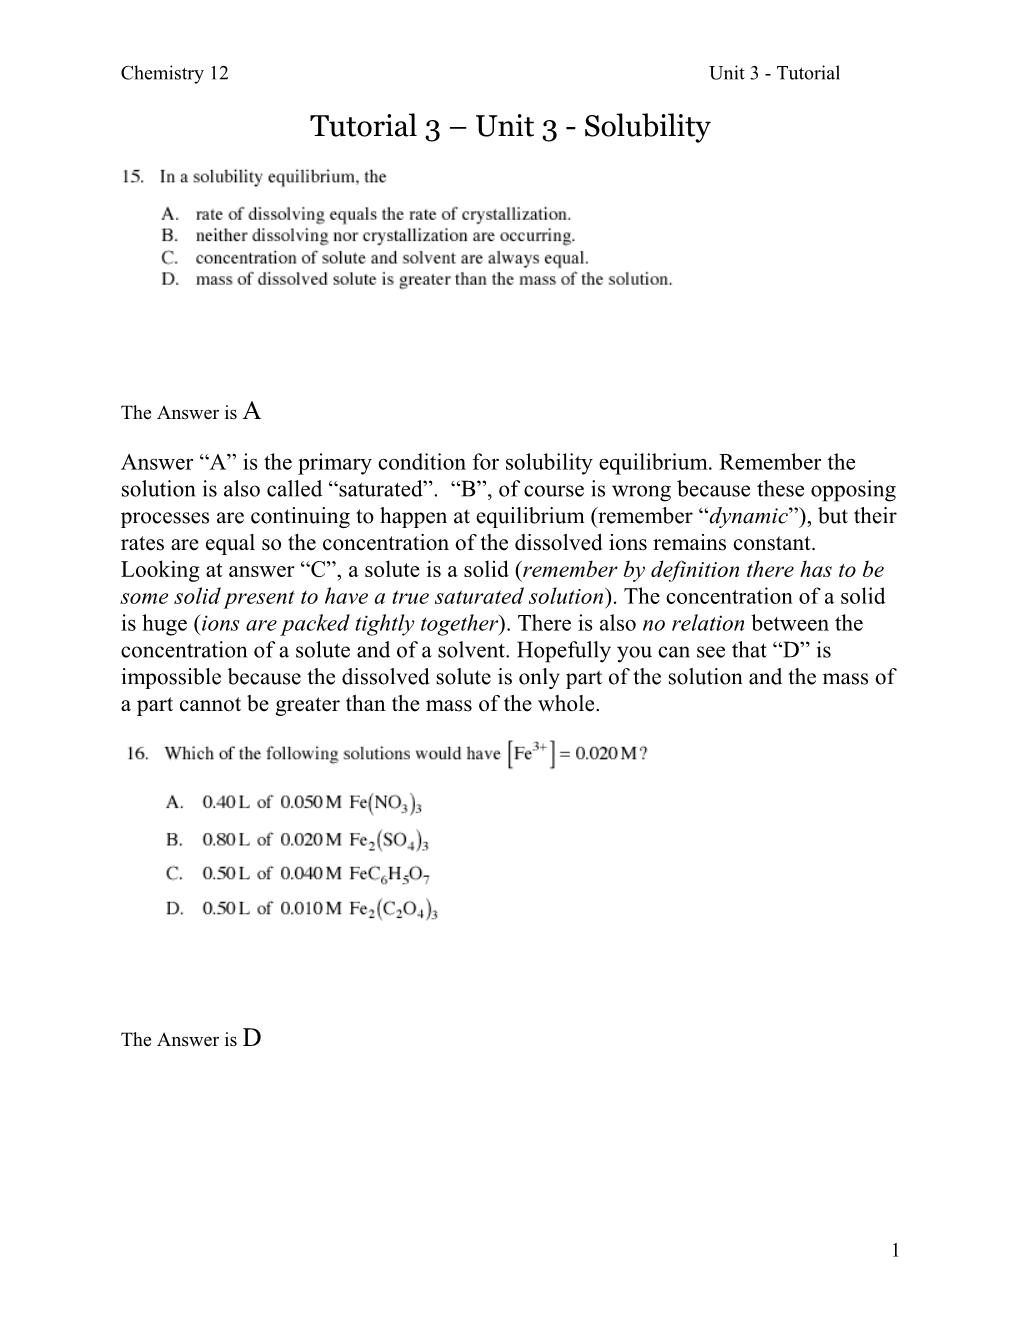 Tutorial 3 Unit 3 - Solubility